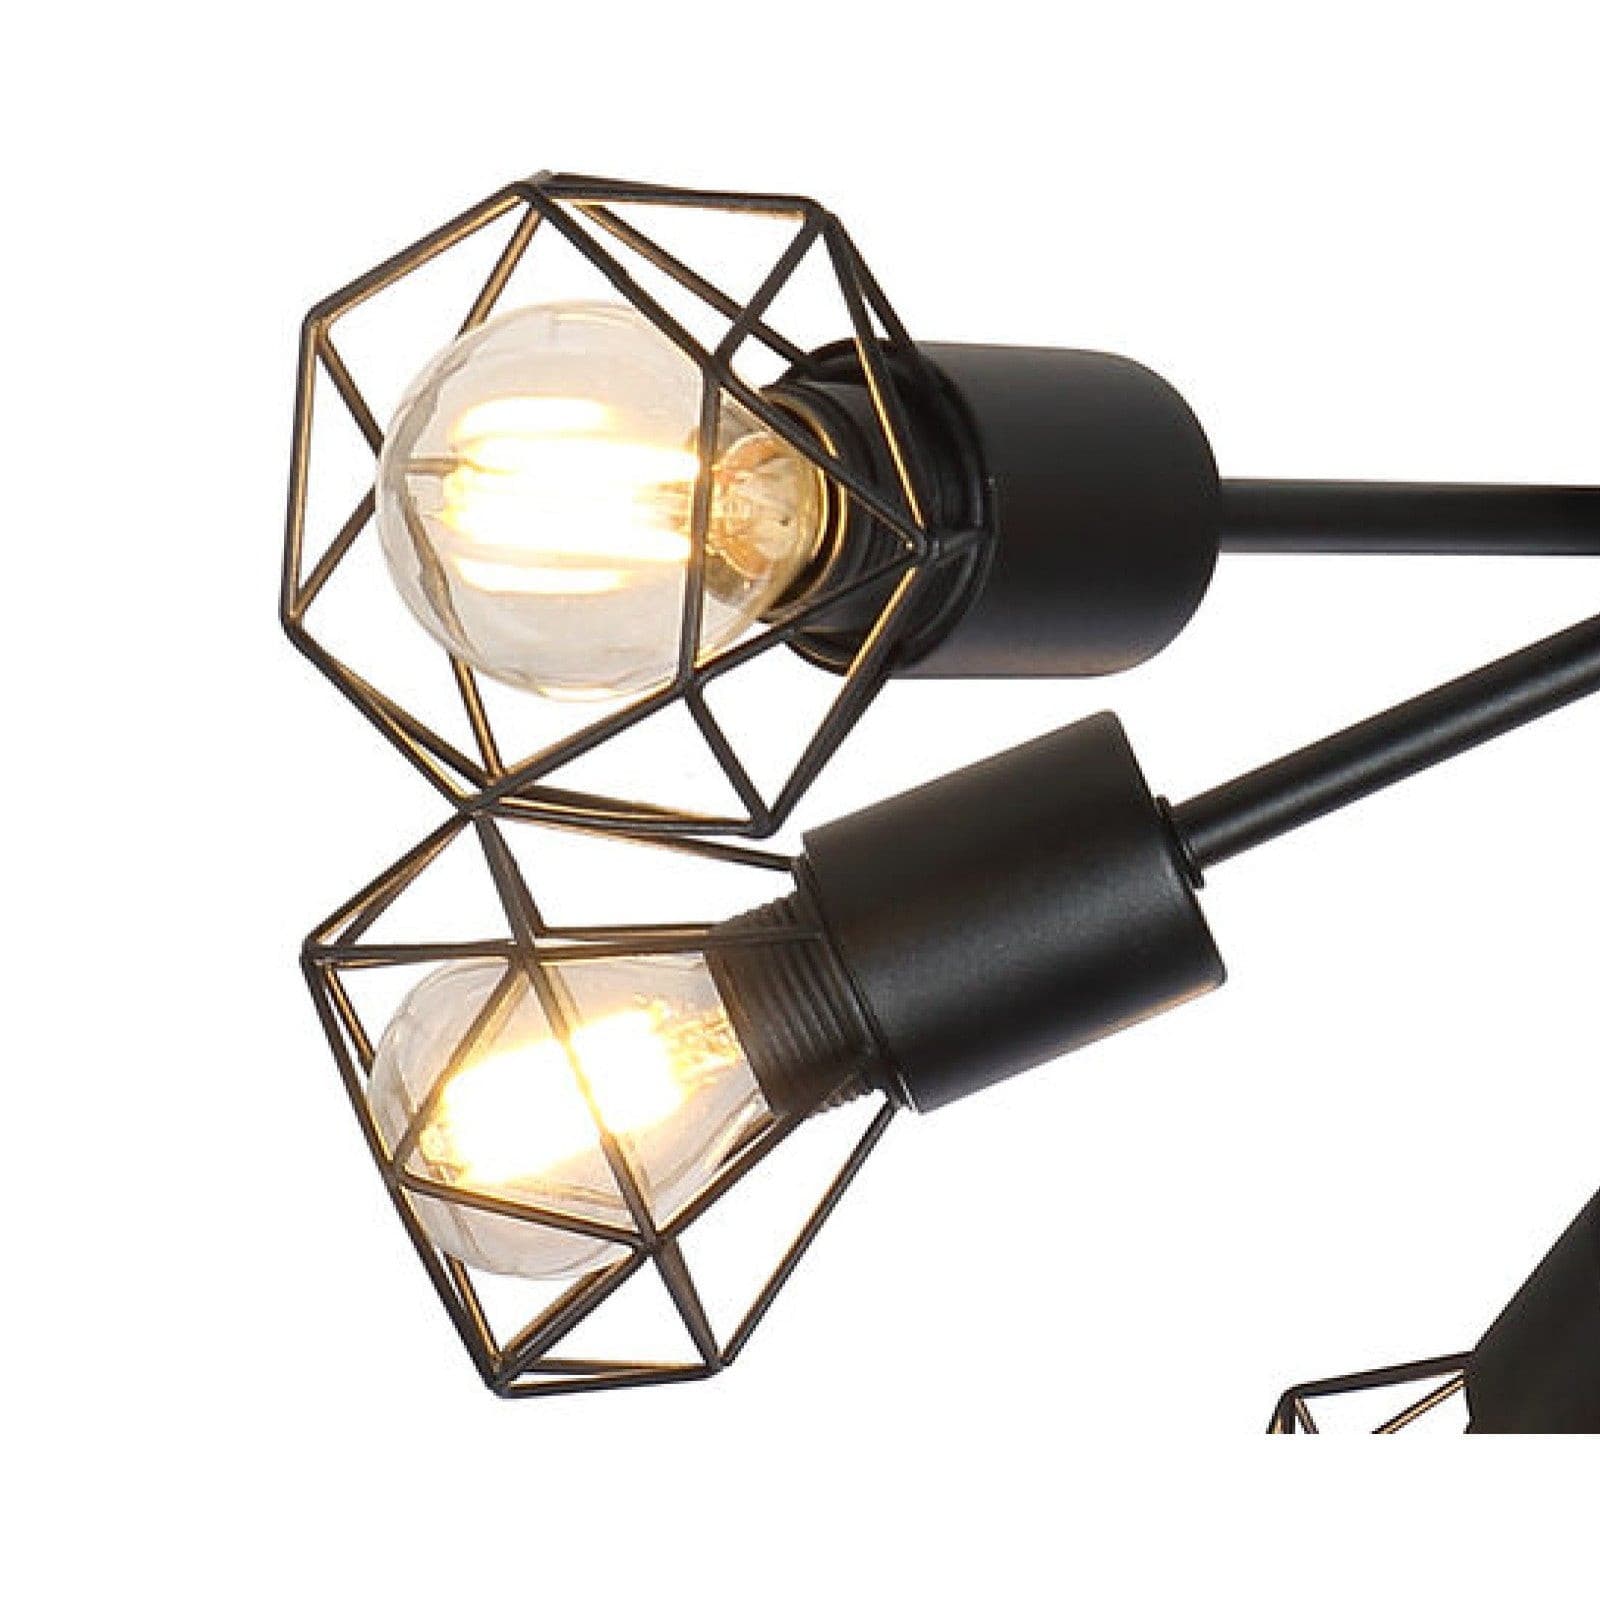 6-Light LED Ceiling Spotlight Kitchen Bedroom Retro Cage Shade E14 Fitting UKEW